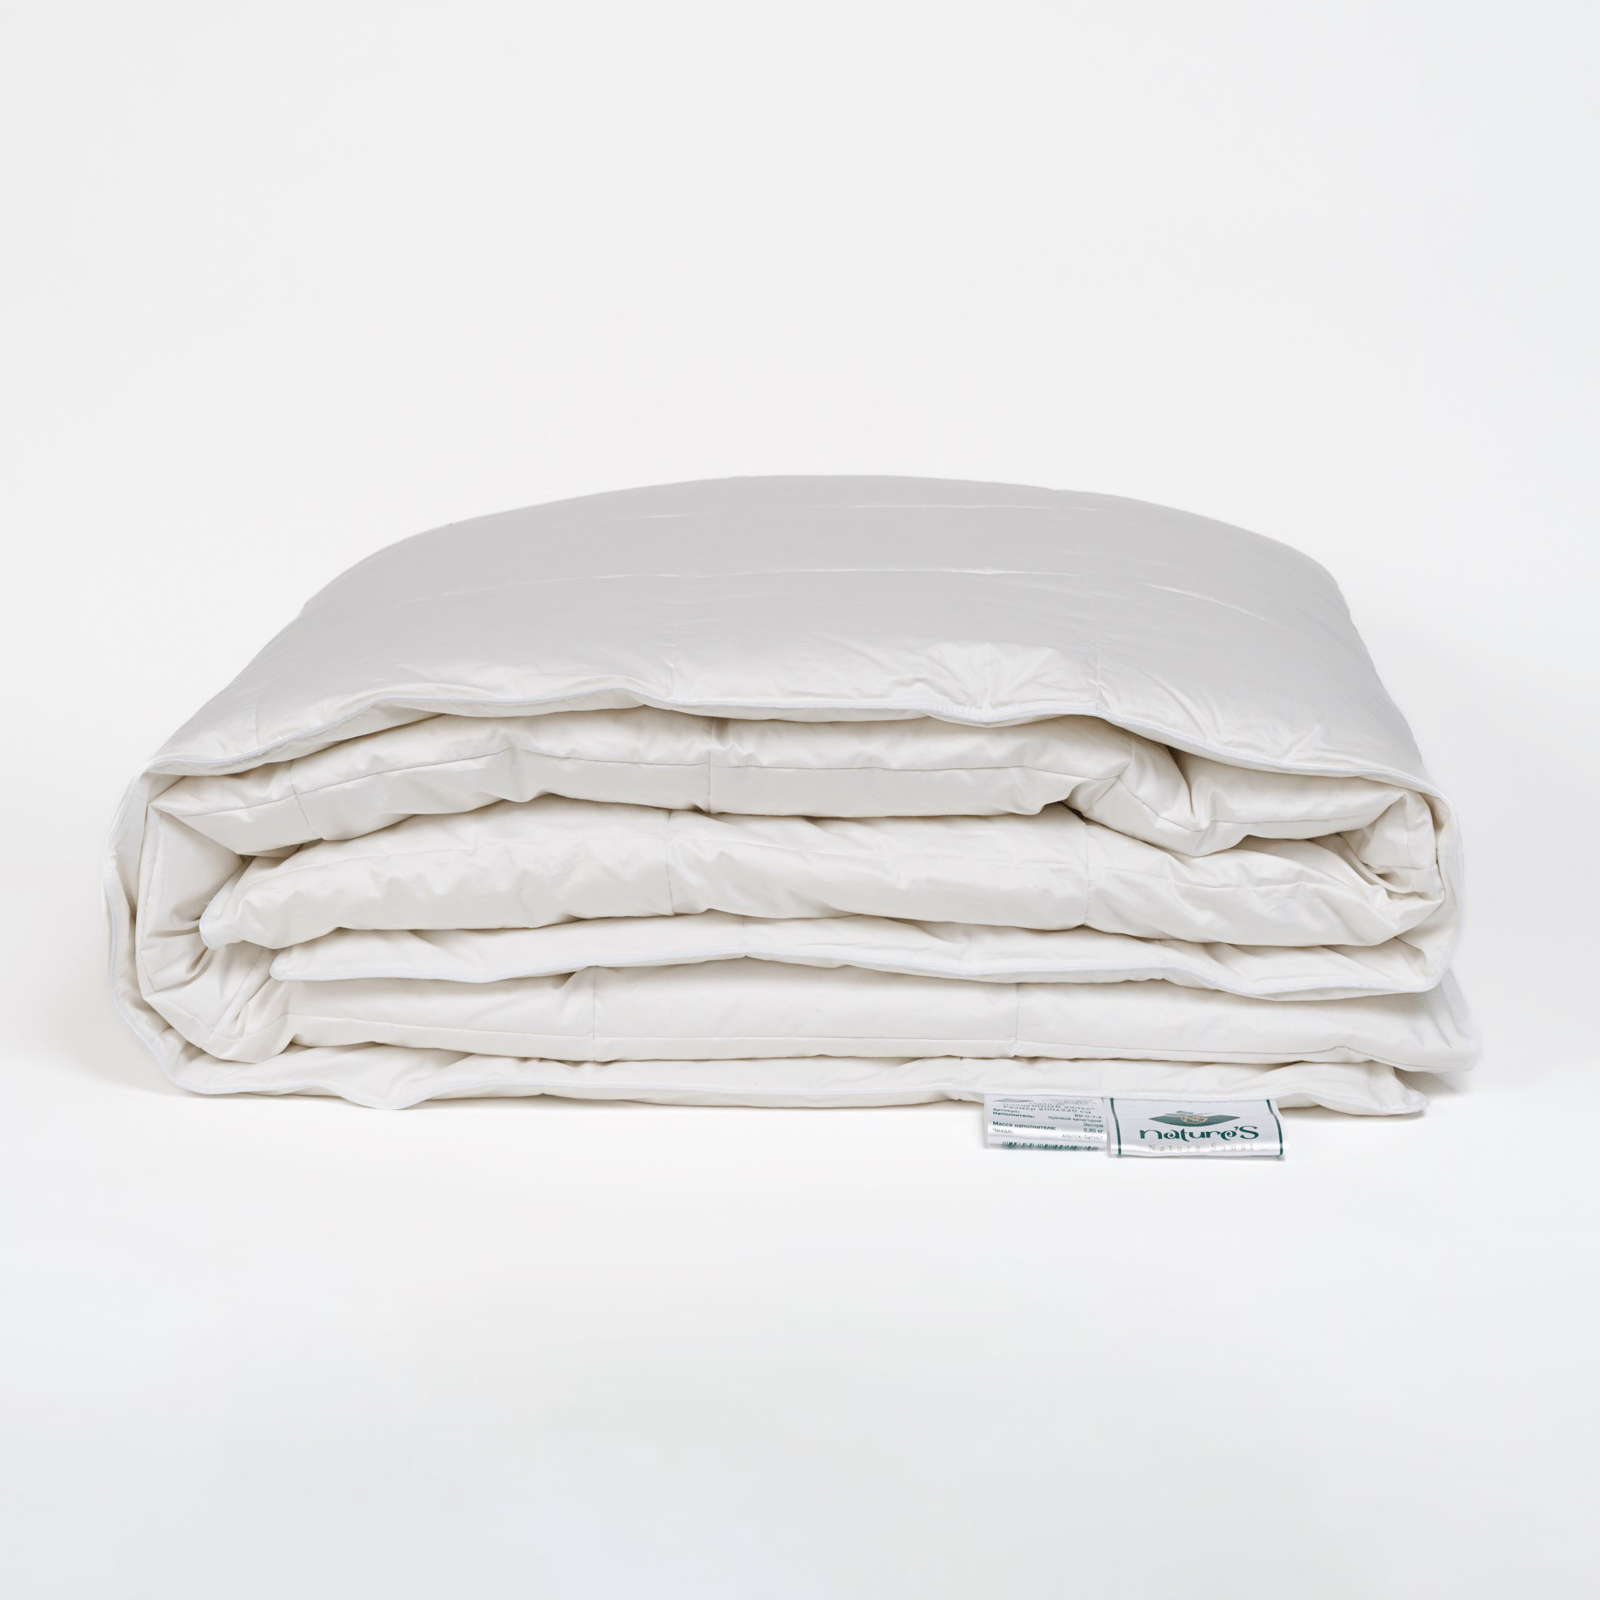 Одеяло Воздушный Вальс Тёплое (200х200 см), размер 200х200 см nat639352 Одеяло Воздушный Вальс Тёплое (200х200 см) - фото 1